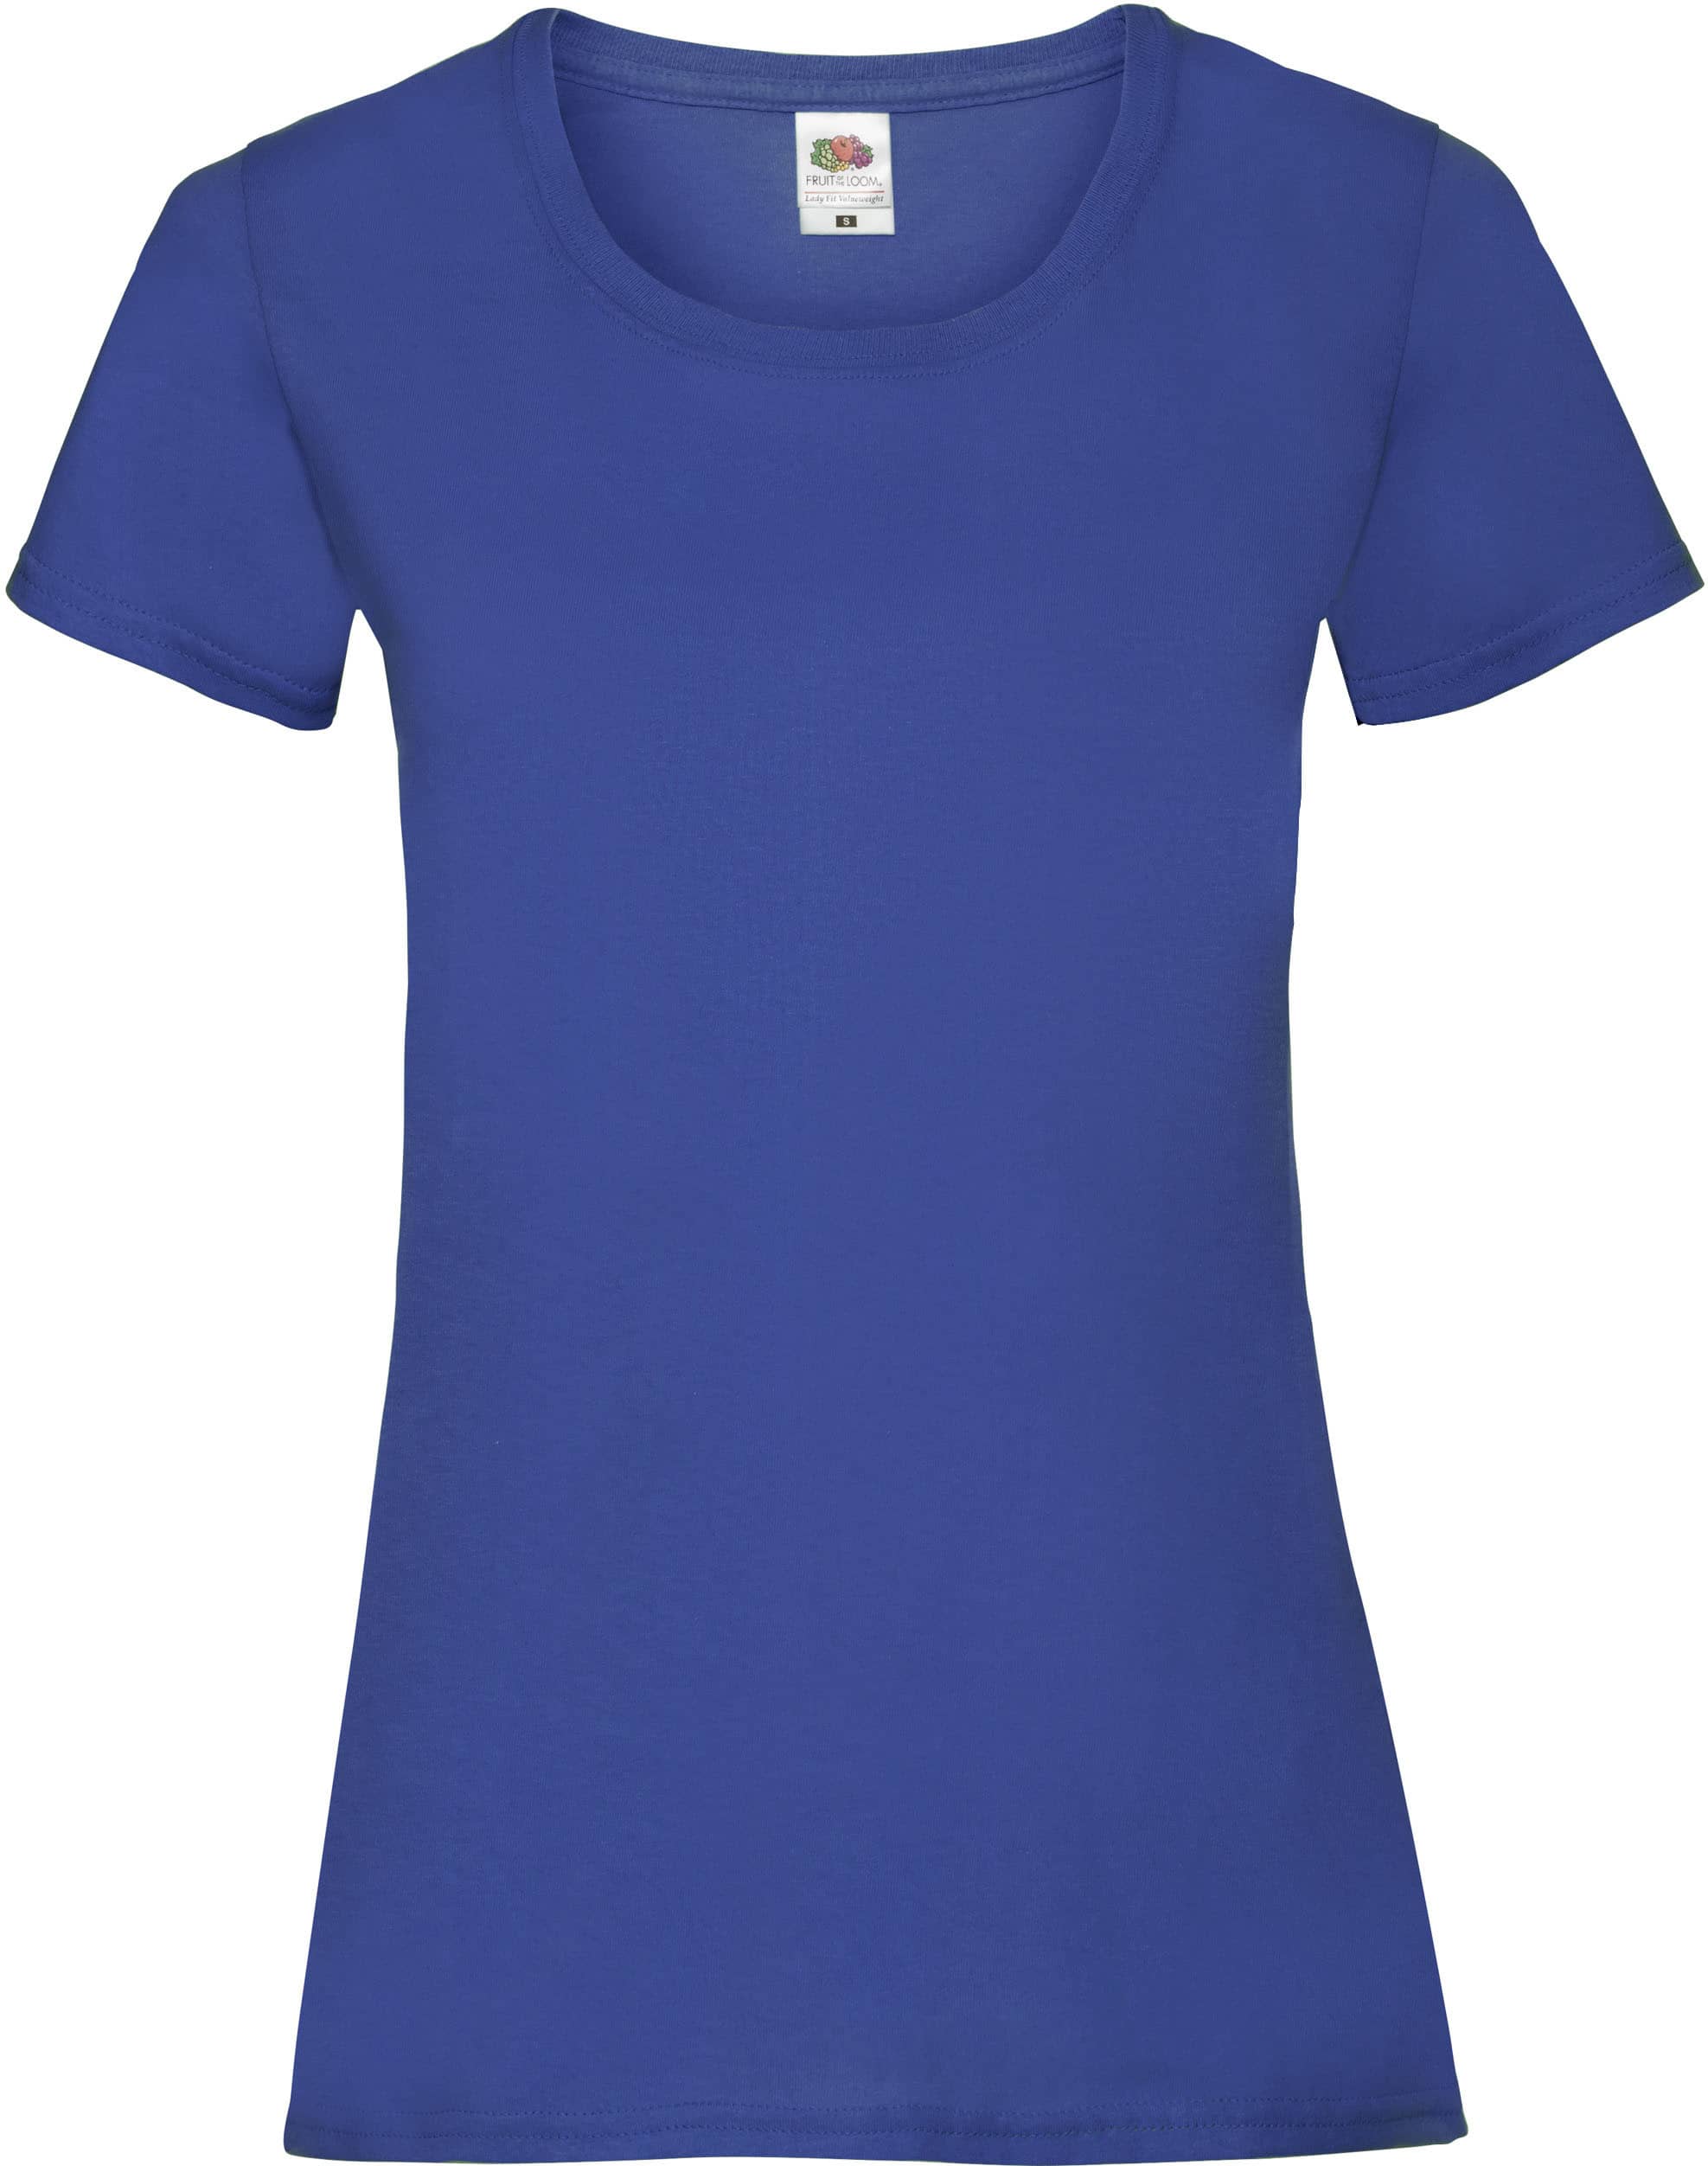 camiseta_personalizada_sc61372_azul_royal (1)